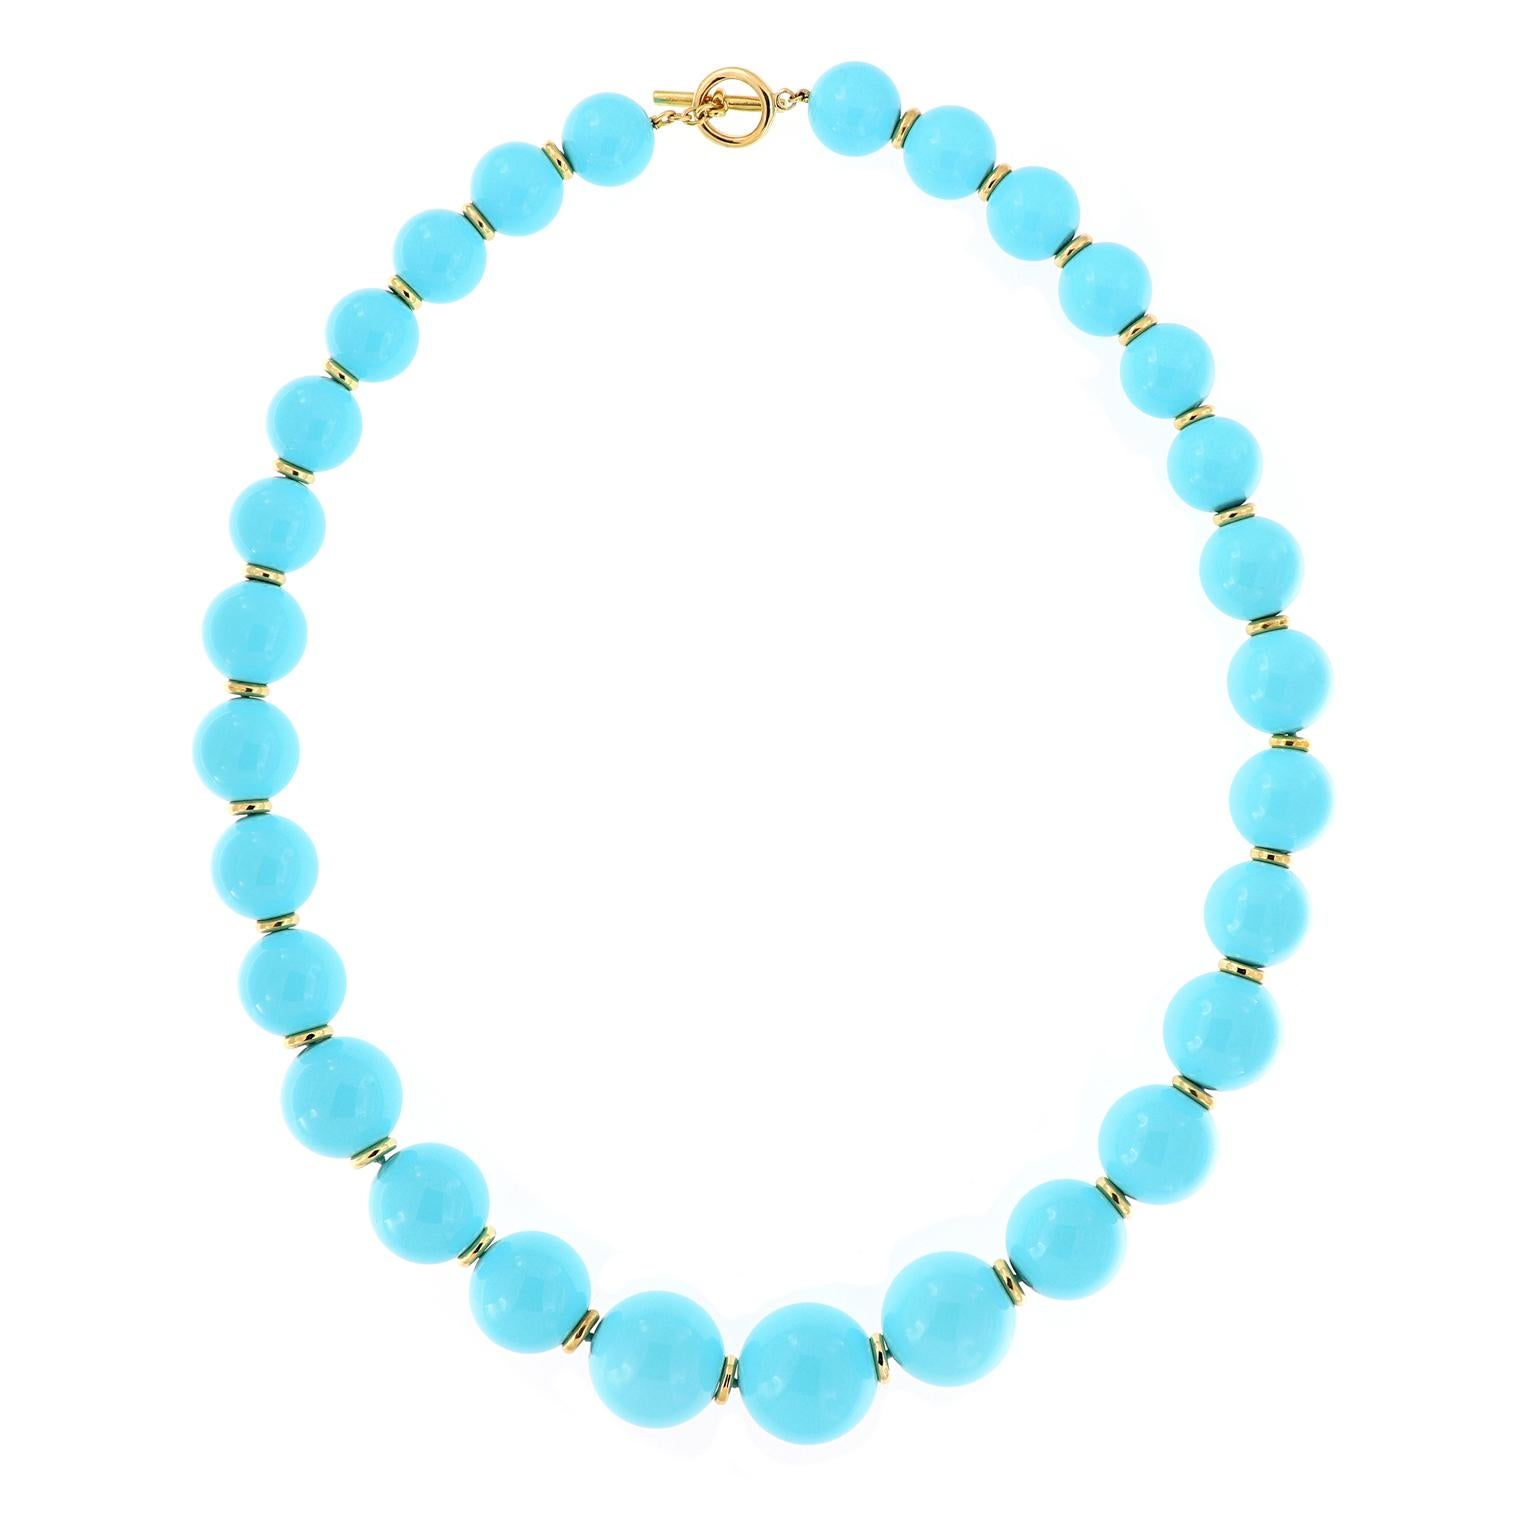 Goshwara “Beyond” Sleeping Beauty Natural Turquoise Beaded Necklace